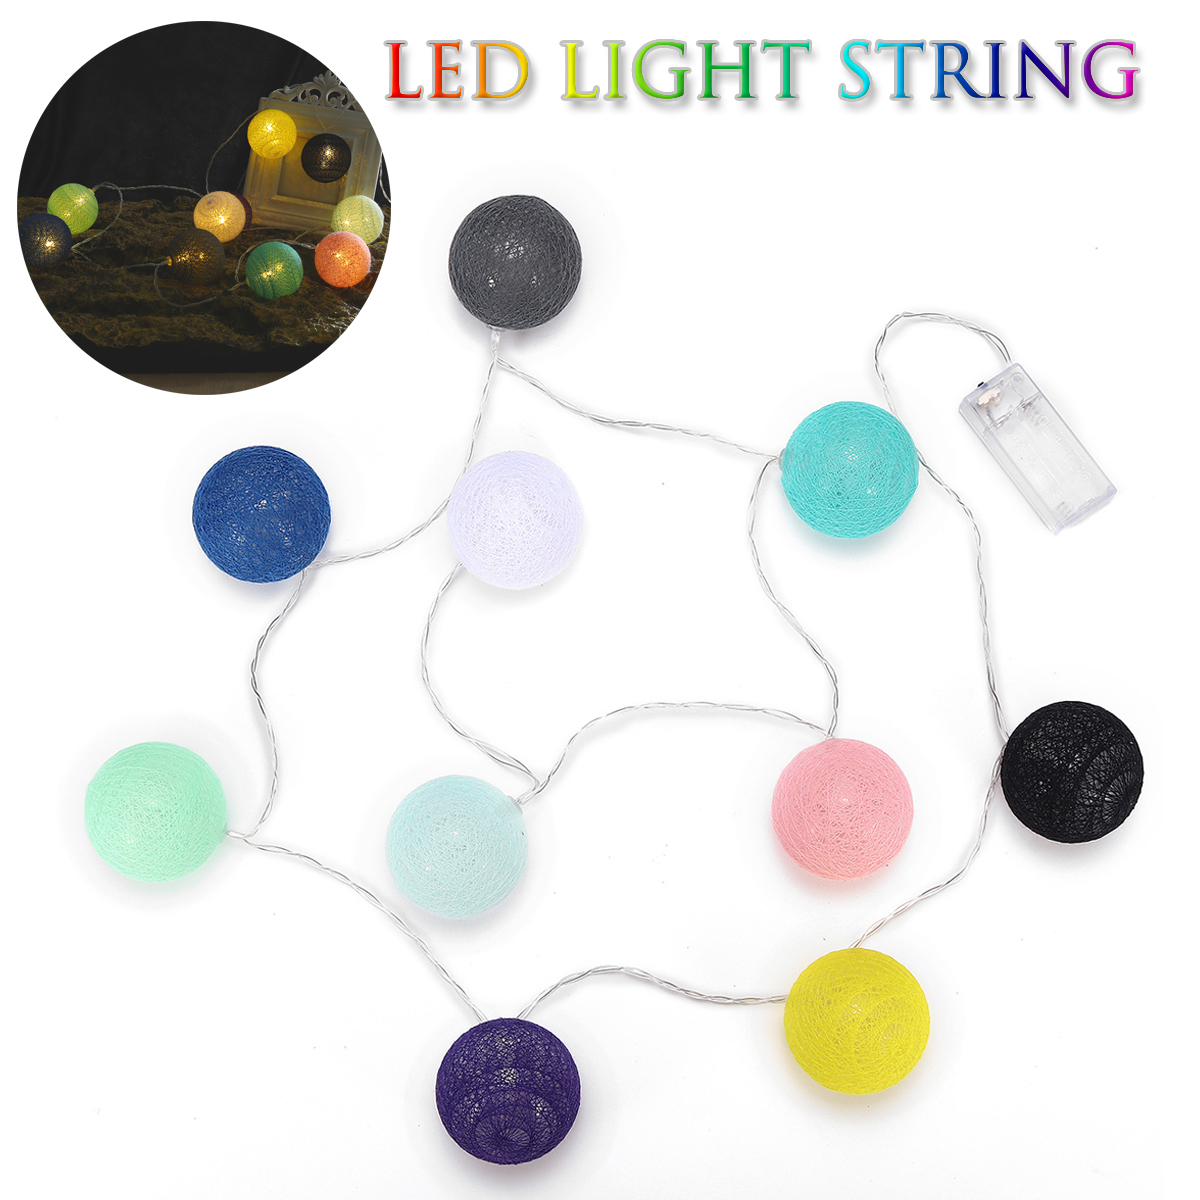 15m-10-Balls-LED-String-Lights-Ball-Bulb-Fairy-Outdoor-Garden-Party-Lamp-Colorful-Christmas-Decor-1758662-2